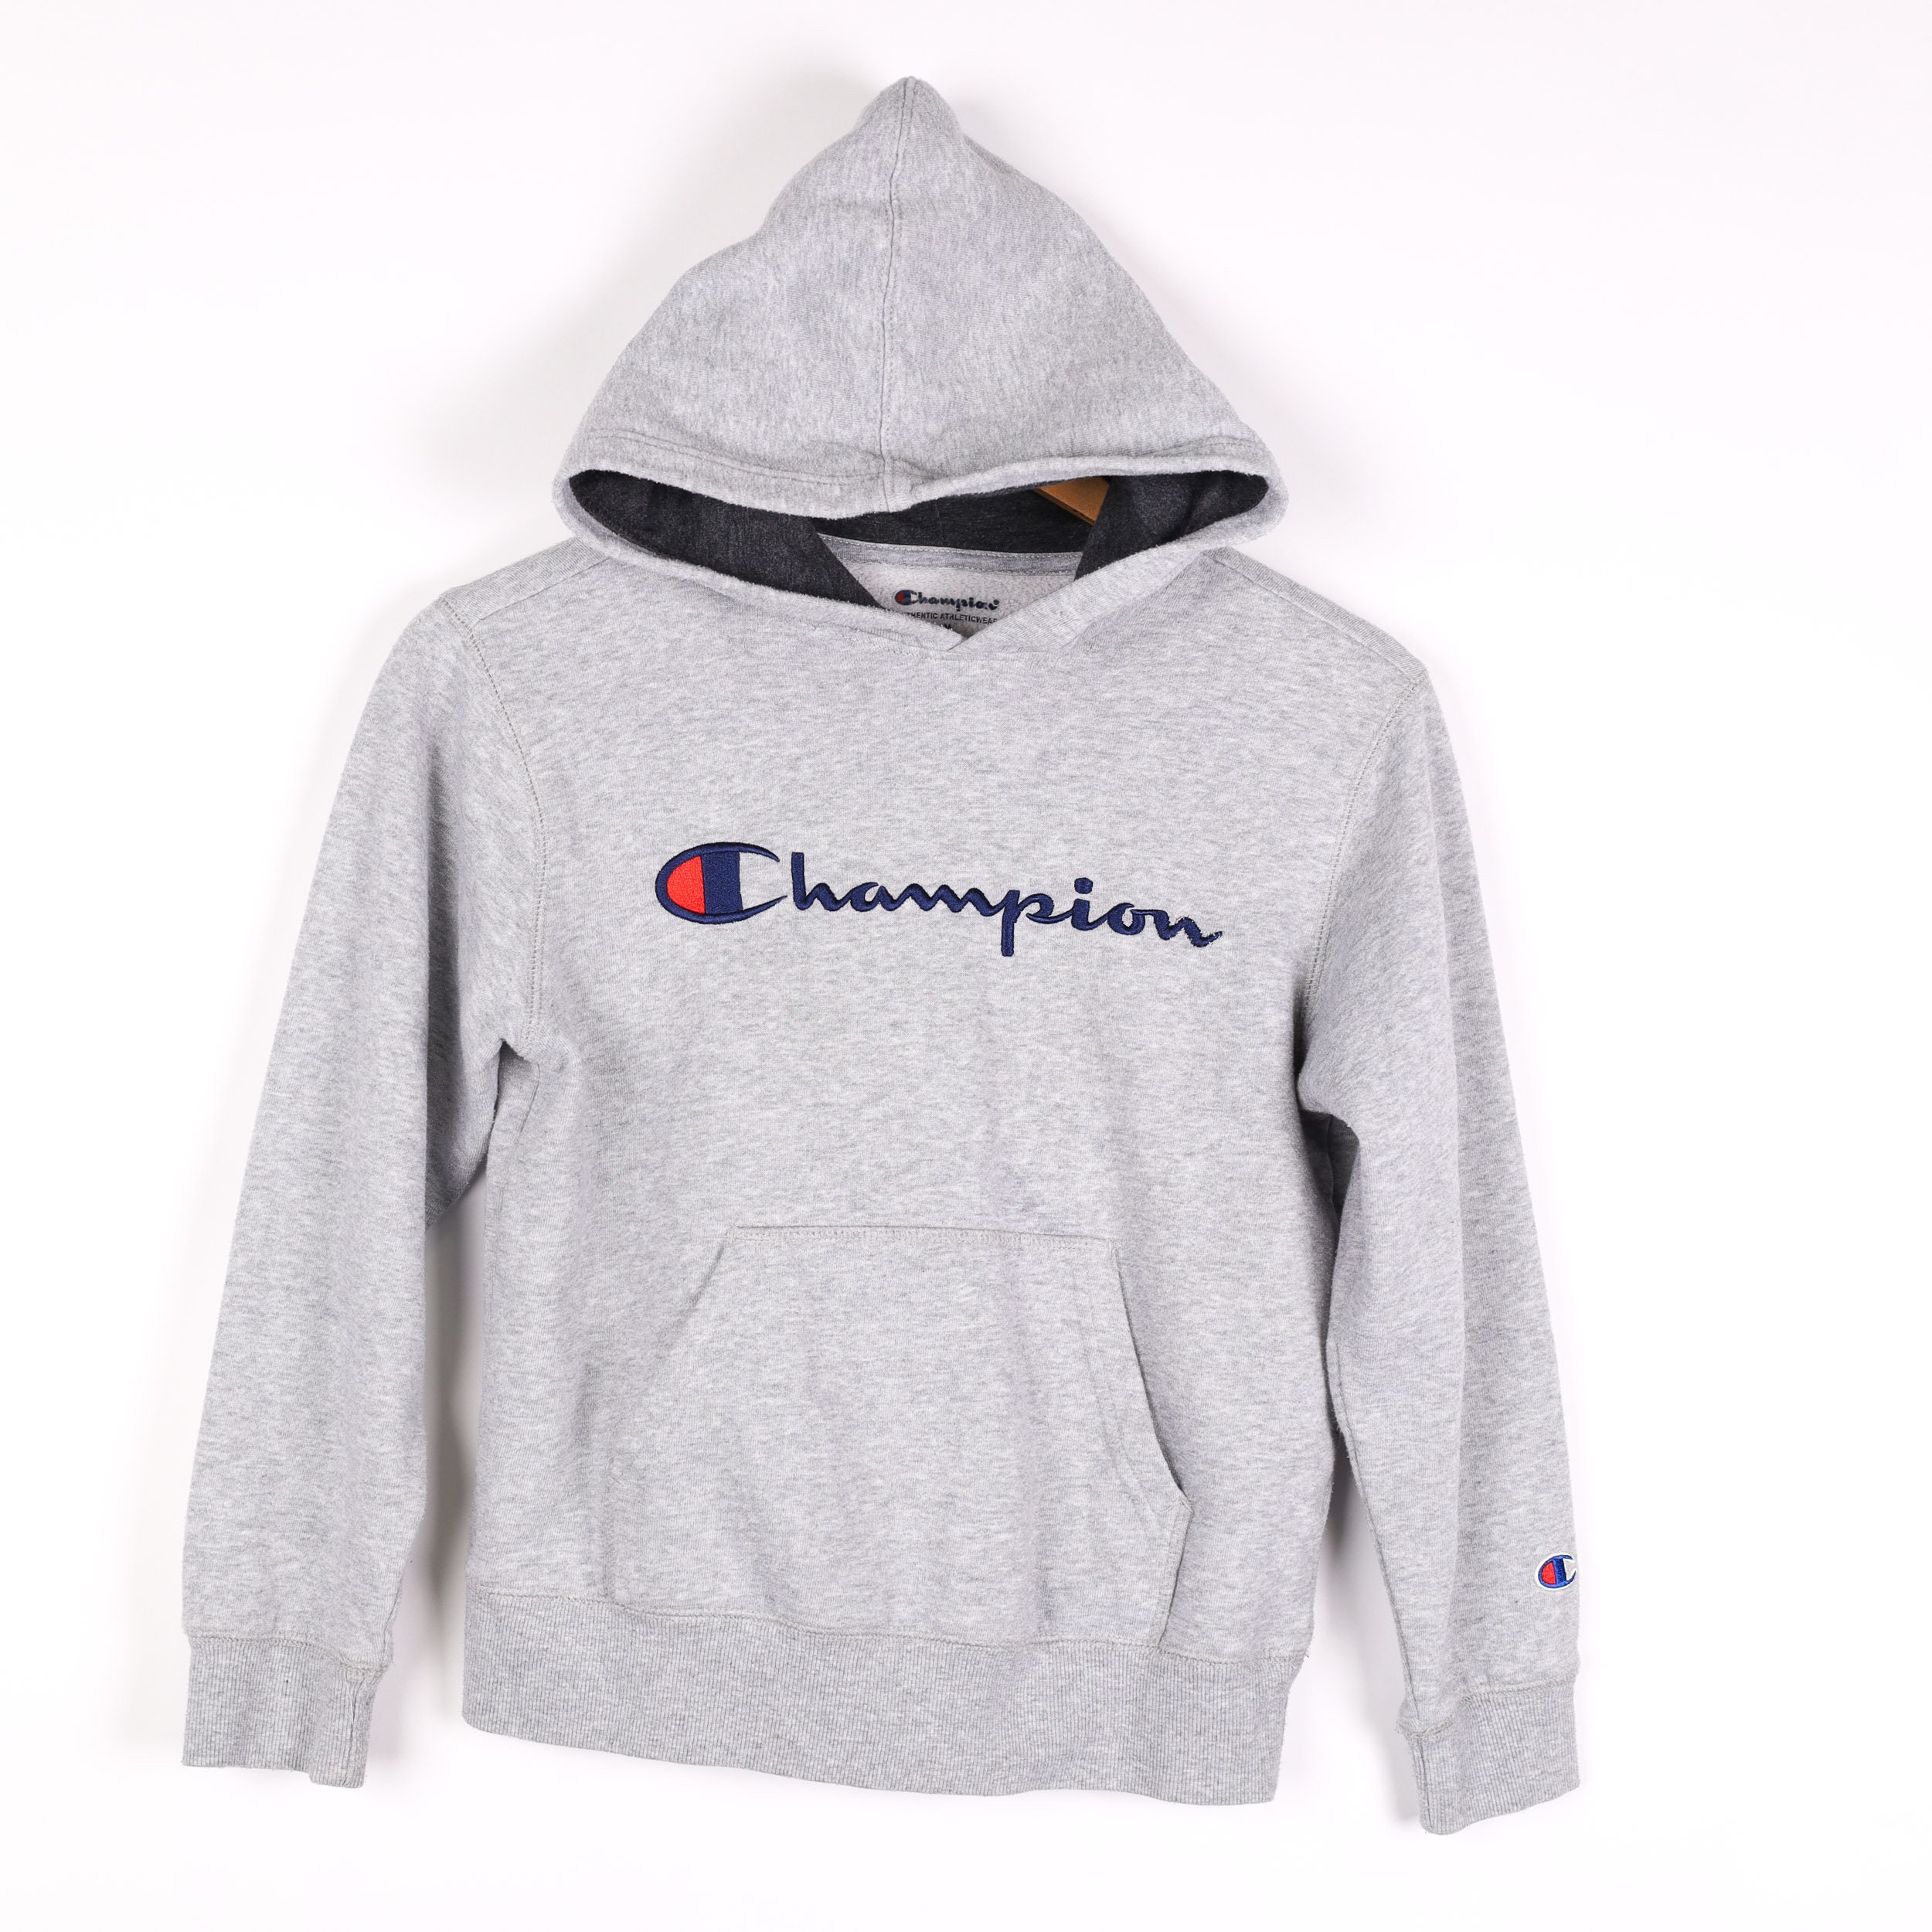 Champion Hoodie Sweatshirt / Youth Medium / Kids Grey Sweater Spellout / -  Etsy